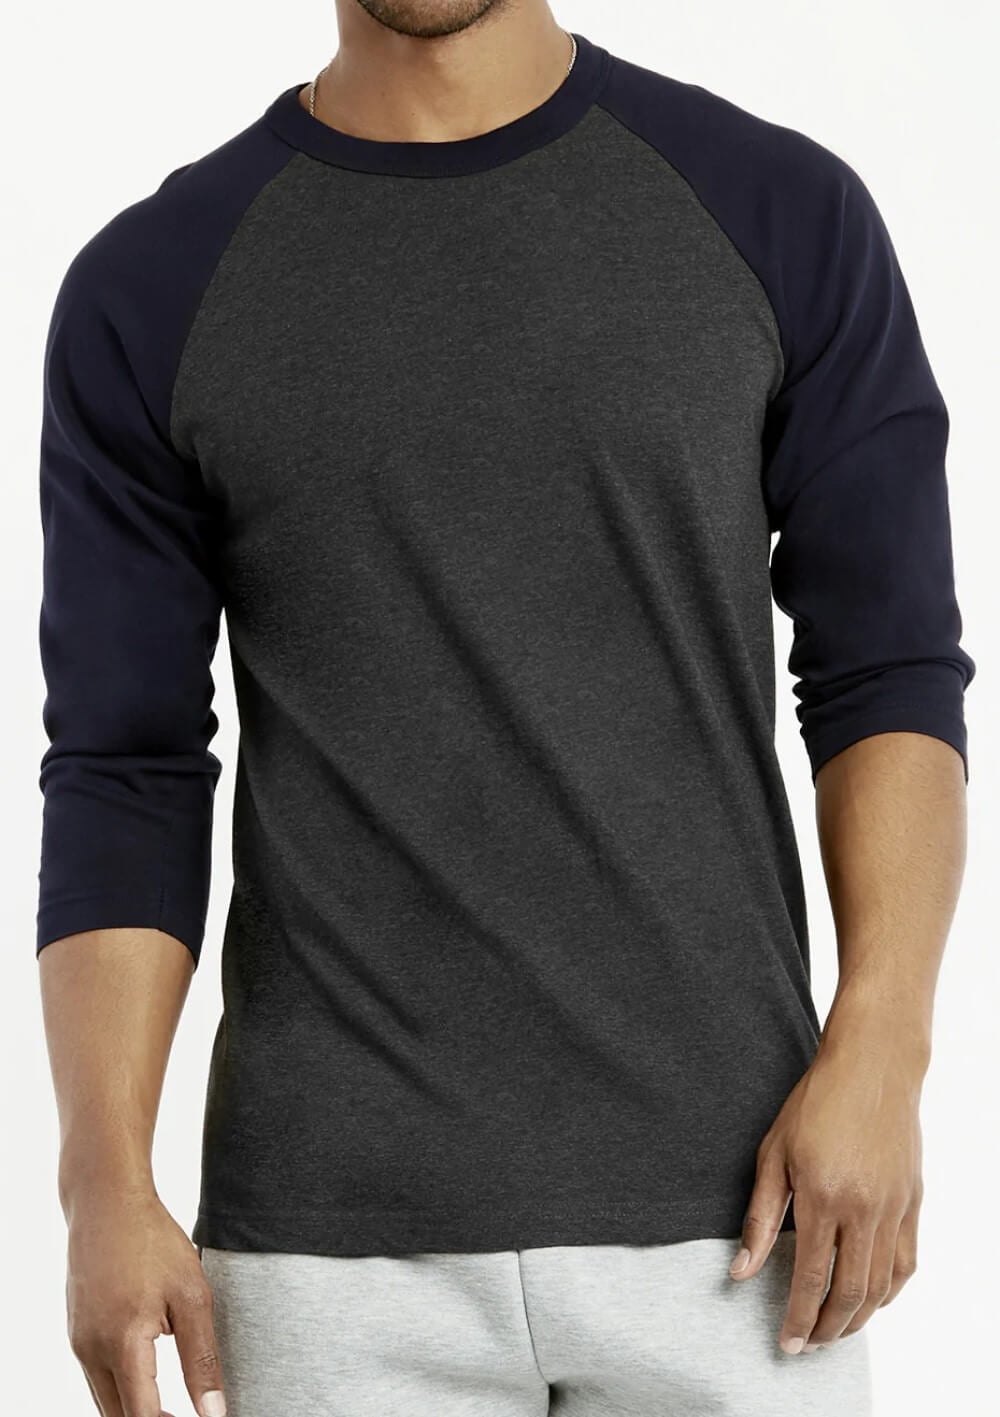 Men's Cotton Raglan Sleeve Baseball Tee Shirt(Navy/Light Gray Large Long  Sleeve)